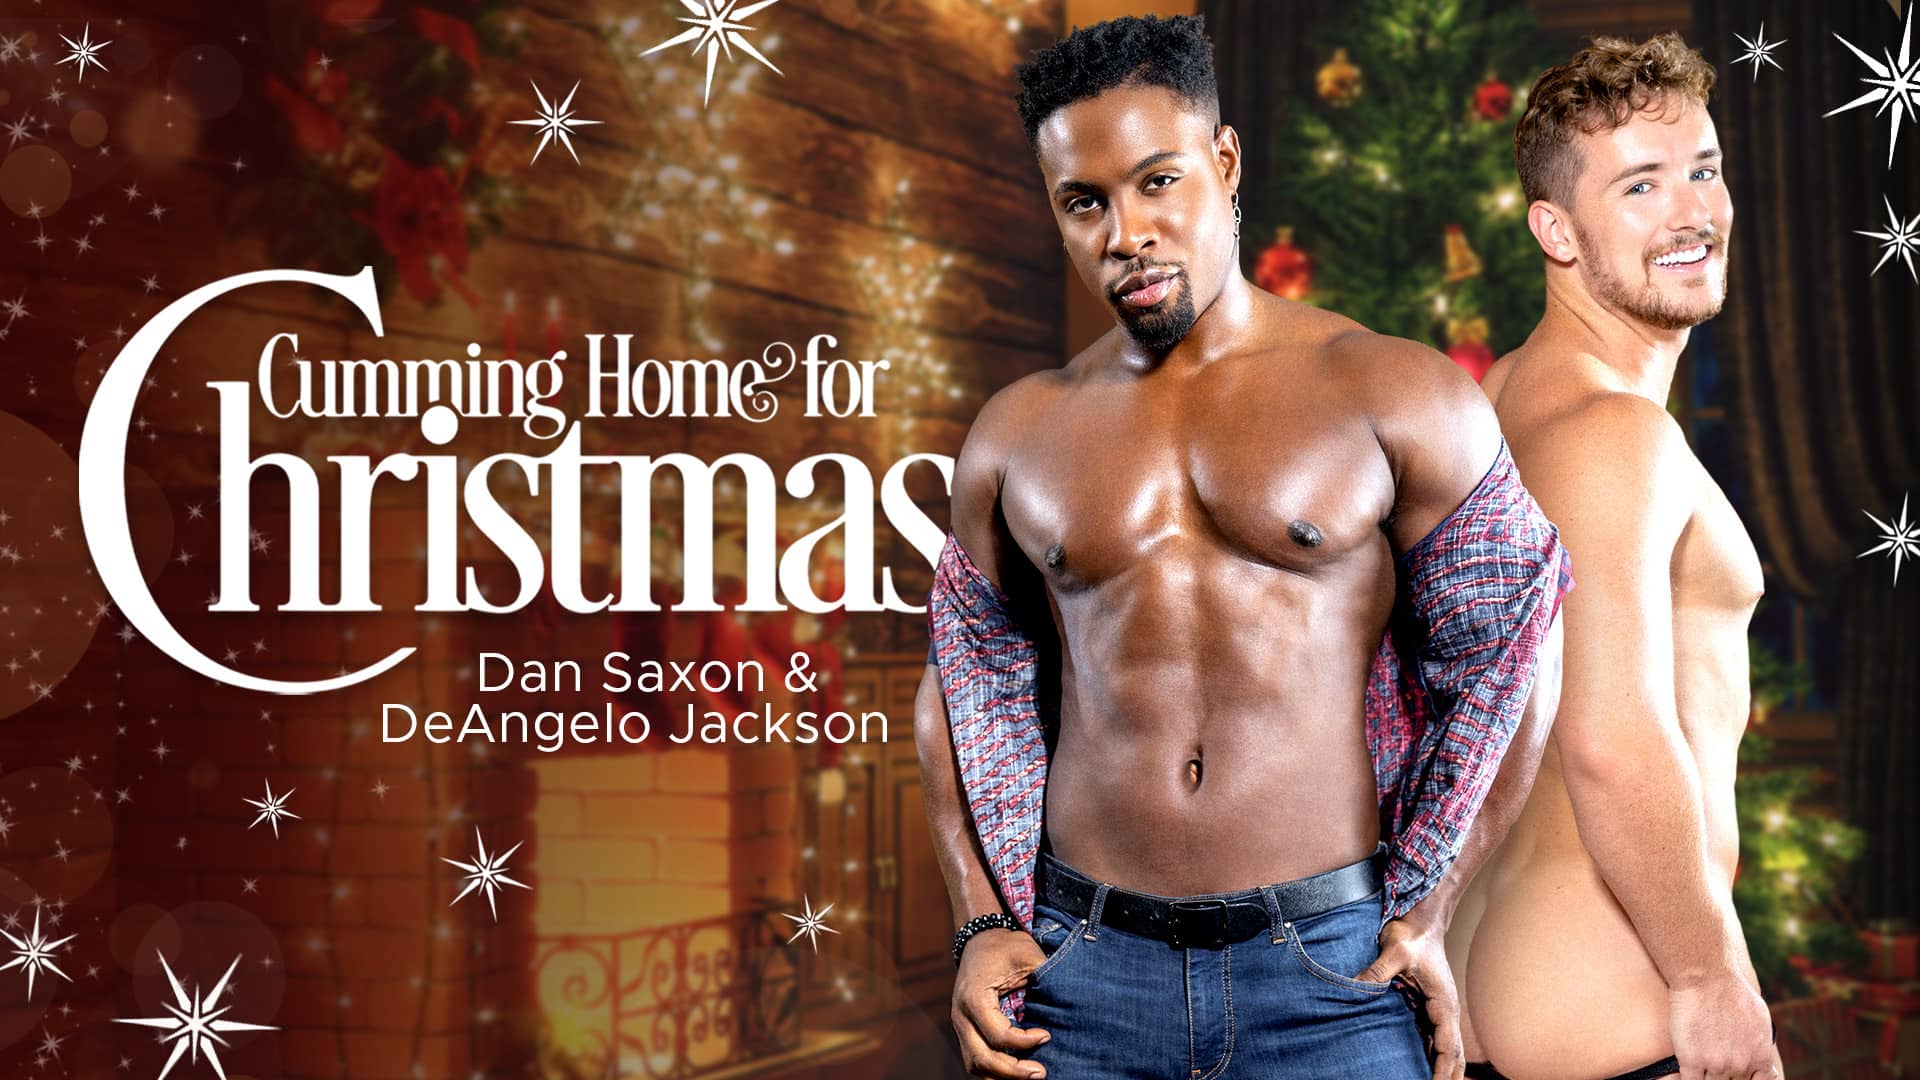 99359 05 01 - Cumming Home For Christmas - Dan Saxon and DeAngelo Jackson